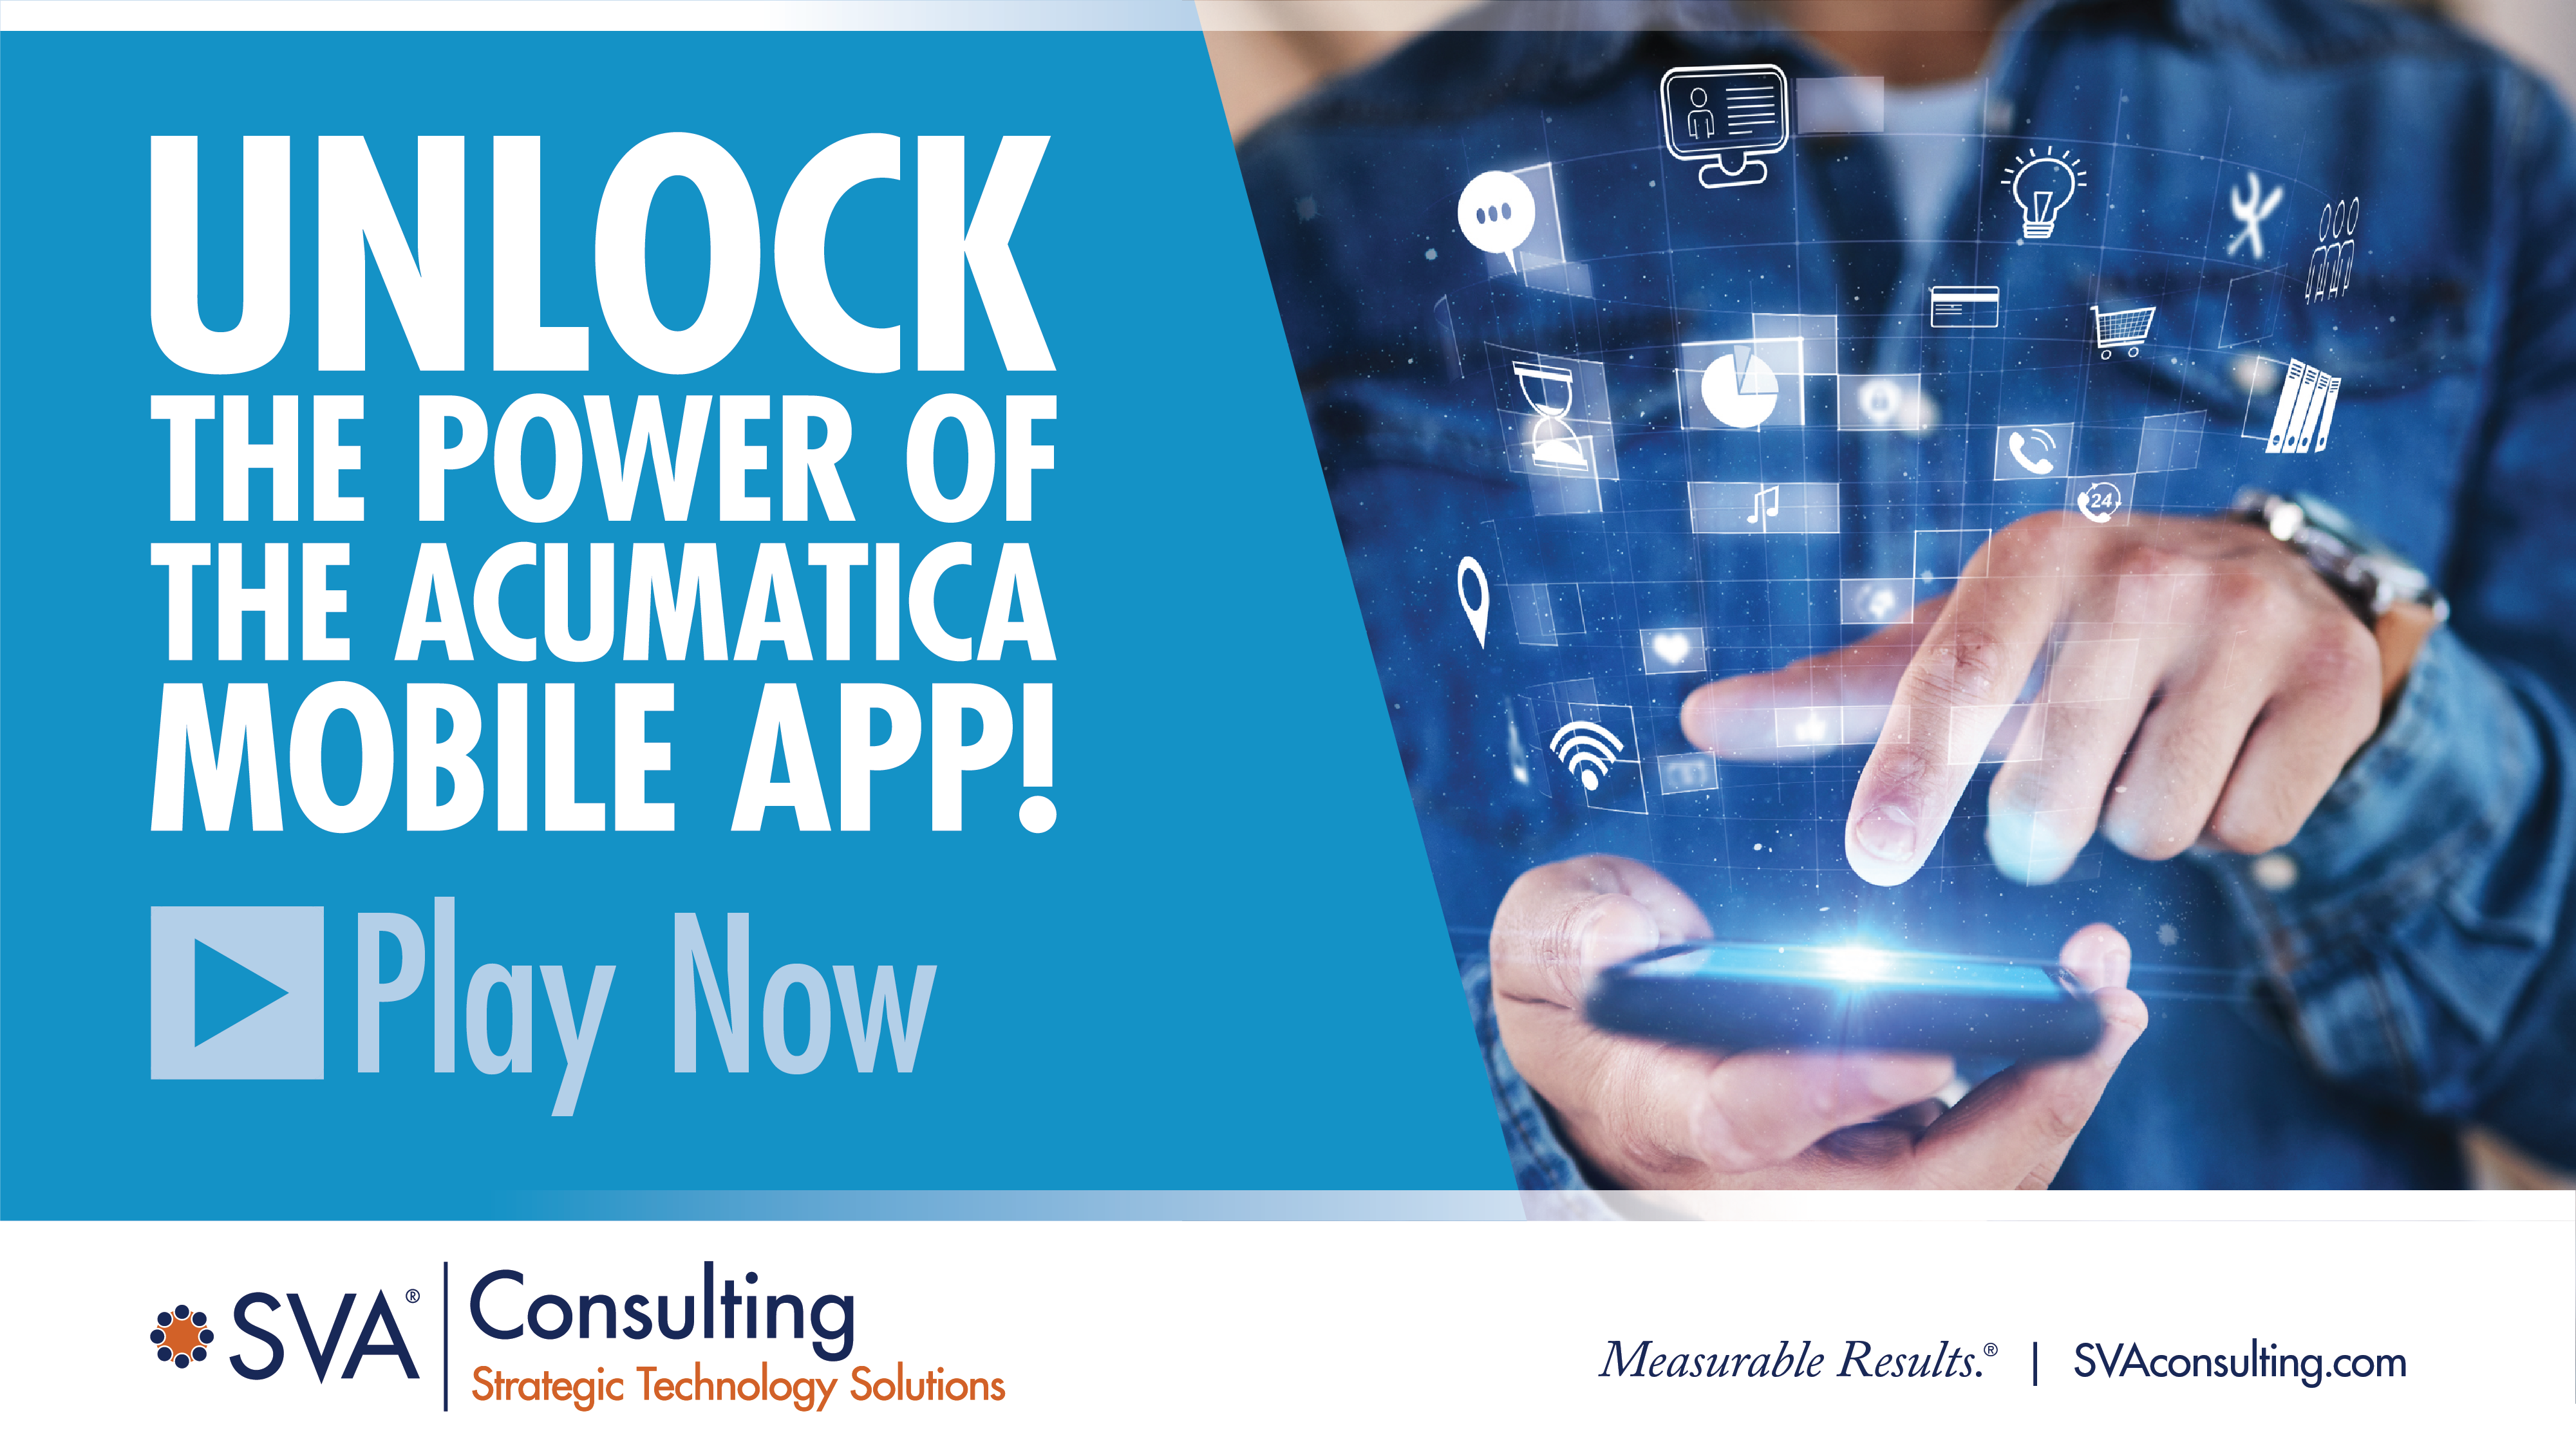 Unlock the Power of the Acumatica Mobile App!